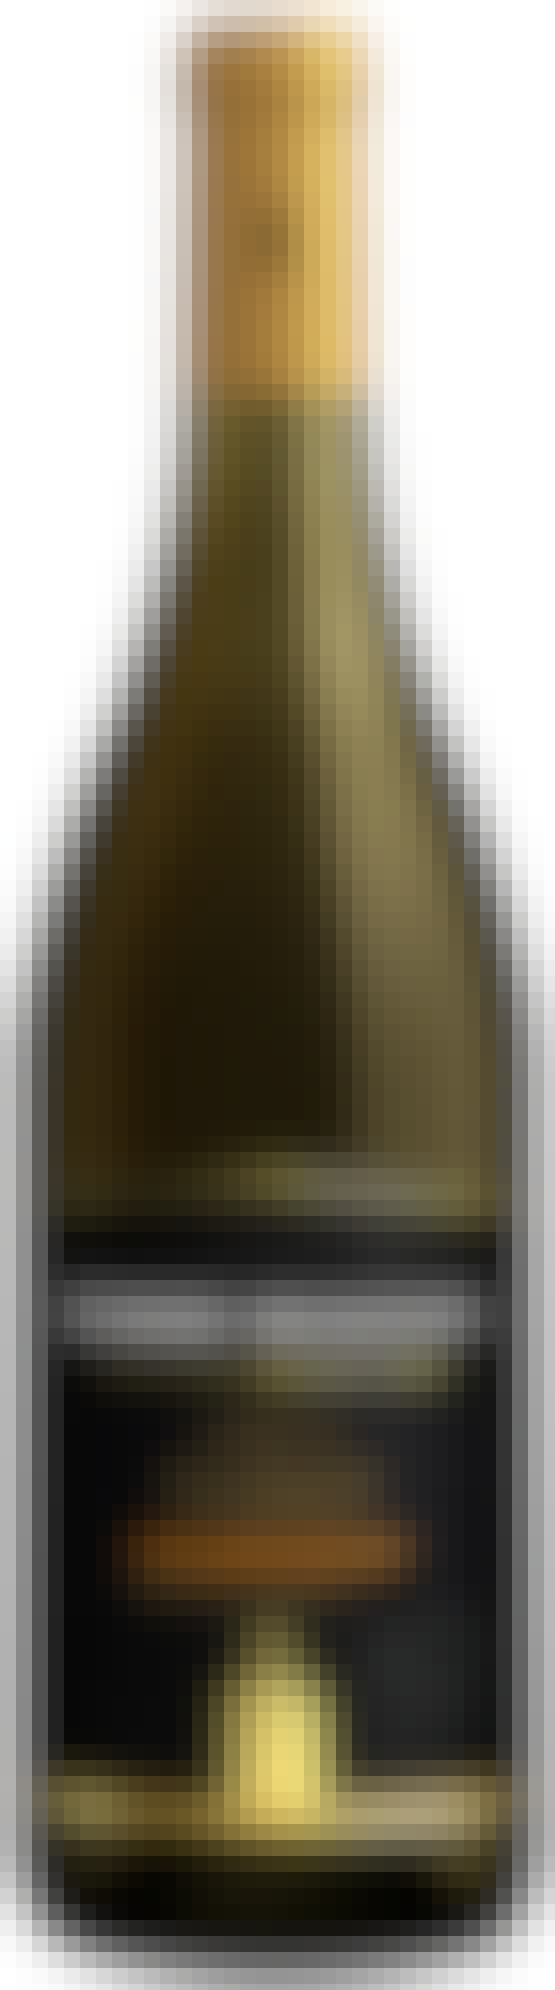 Robert Mondavi Private Selection Bourbon Barrel Aged Chardonnay 750ml